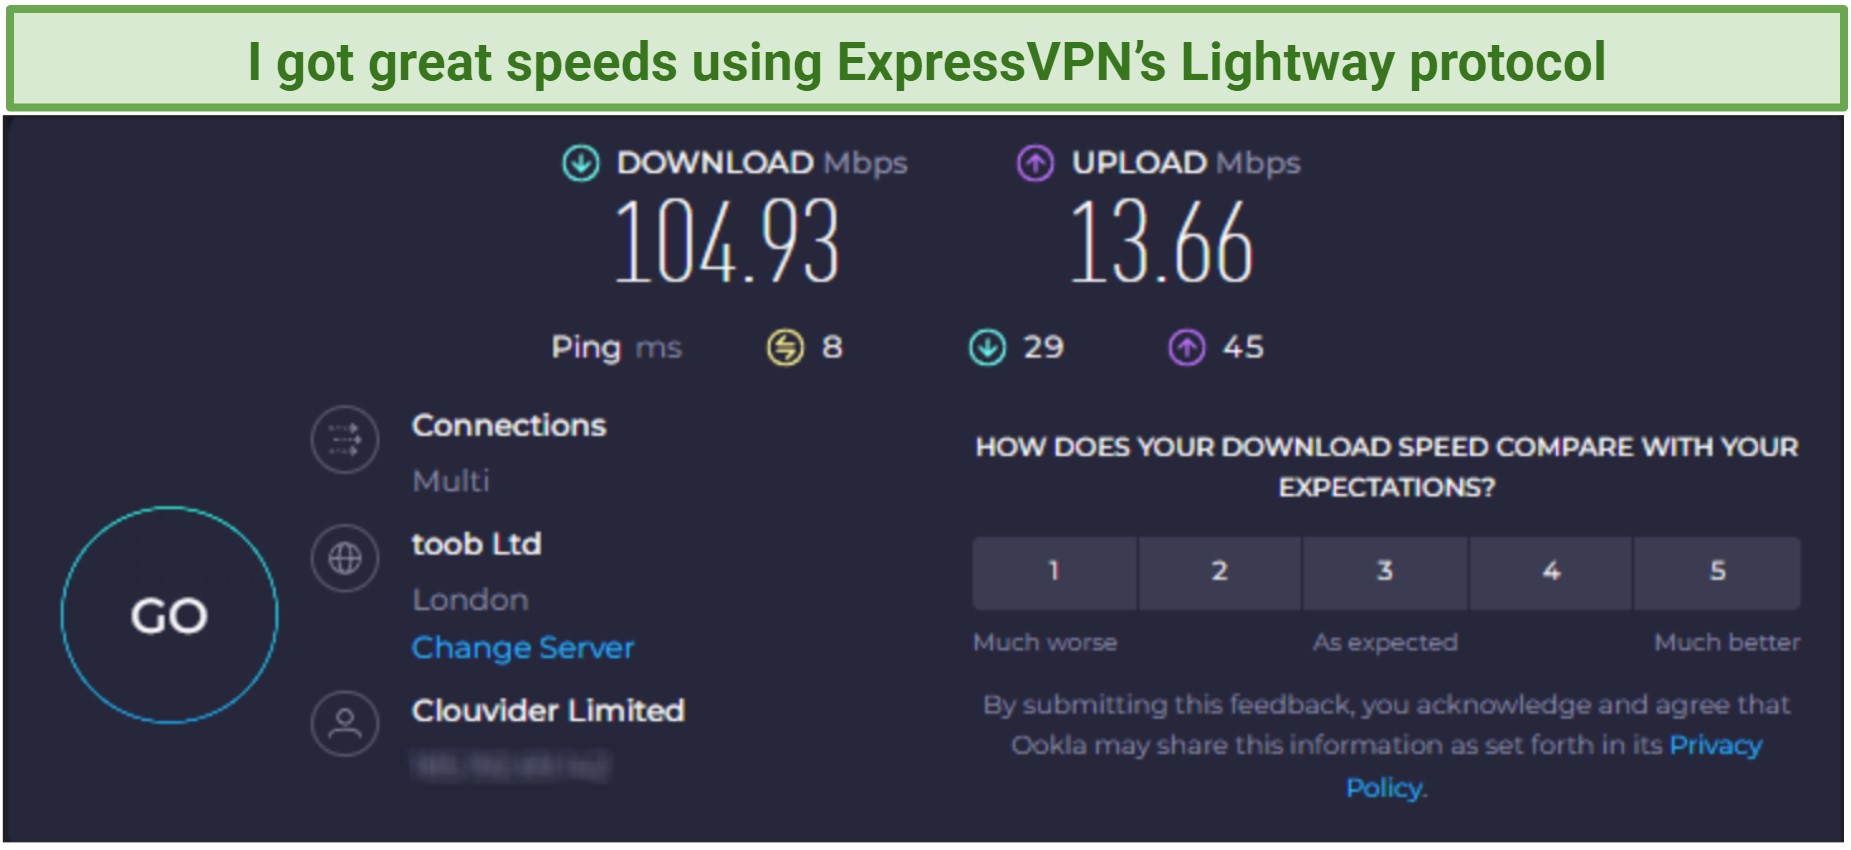 Speed test results of ExpressVPN's London server